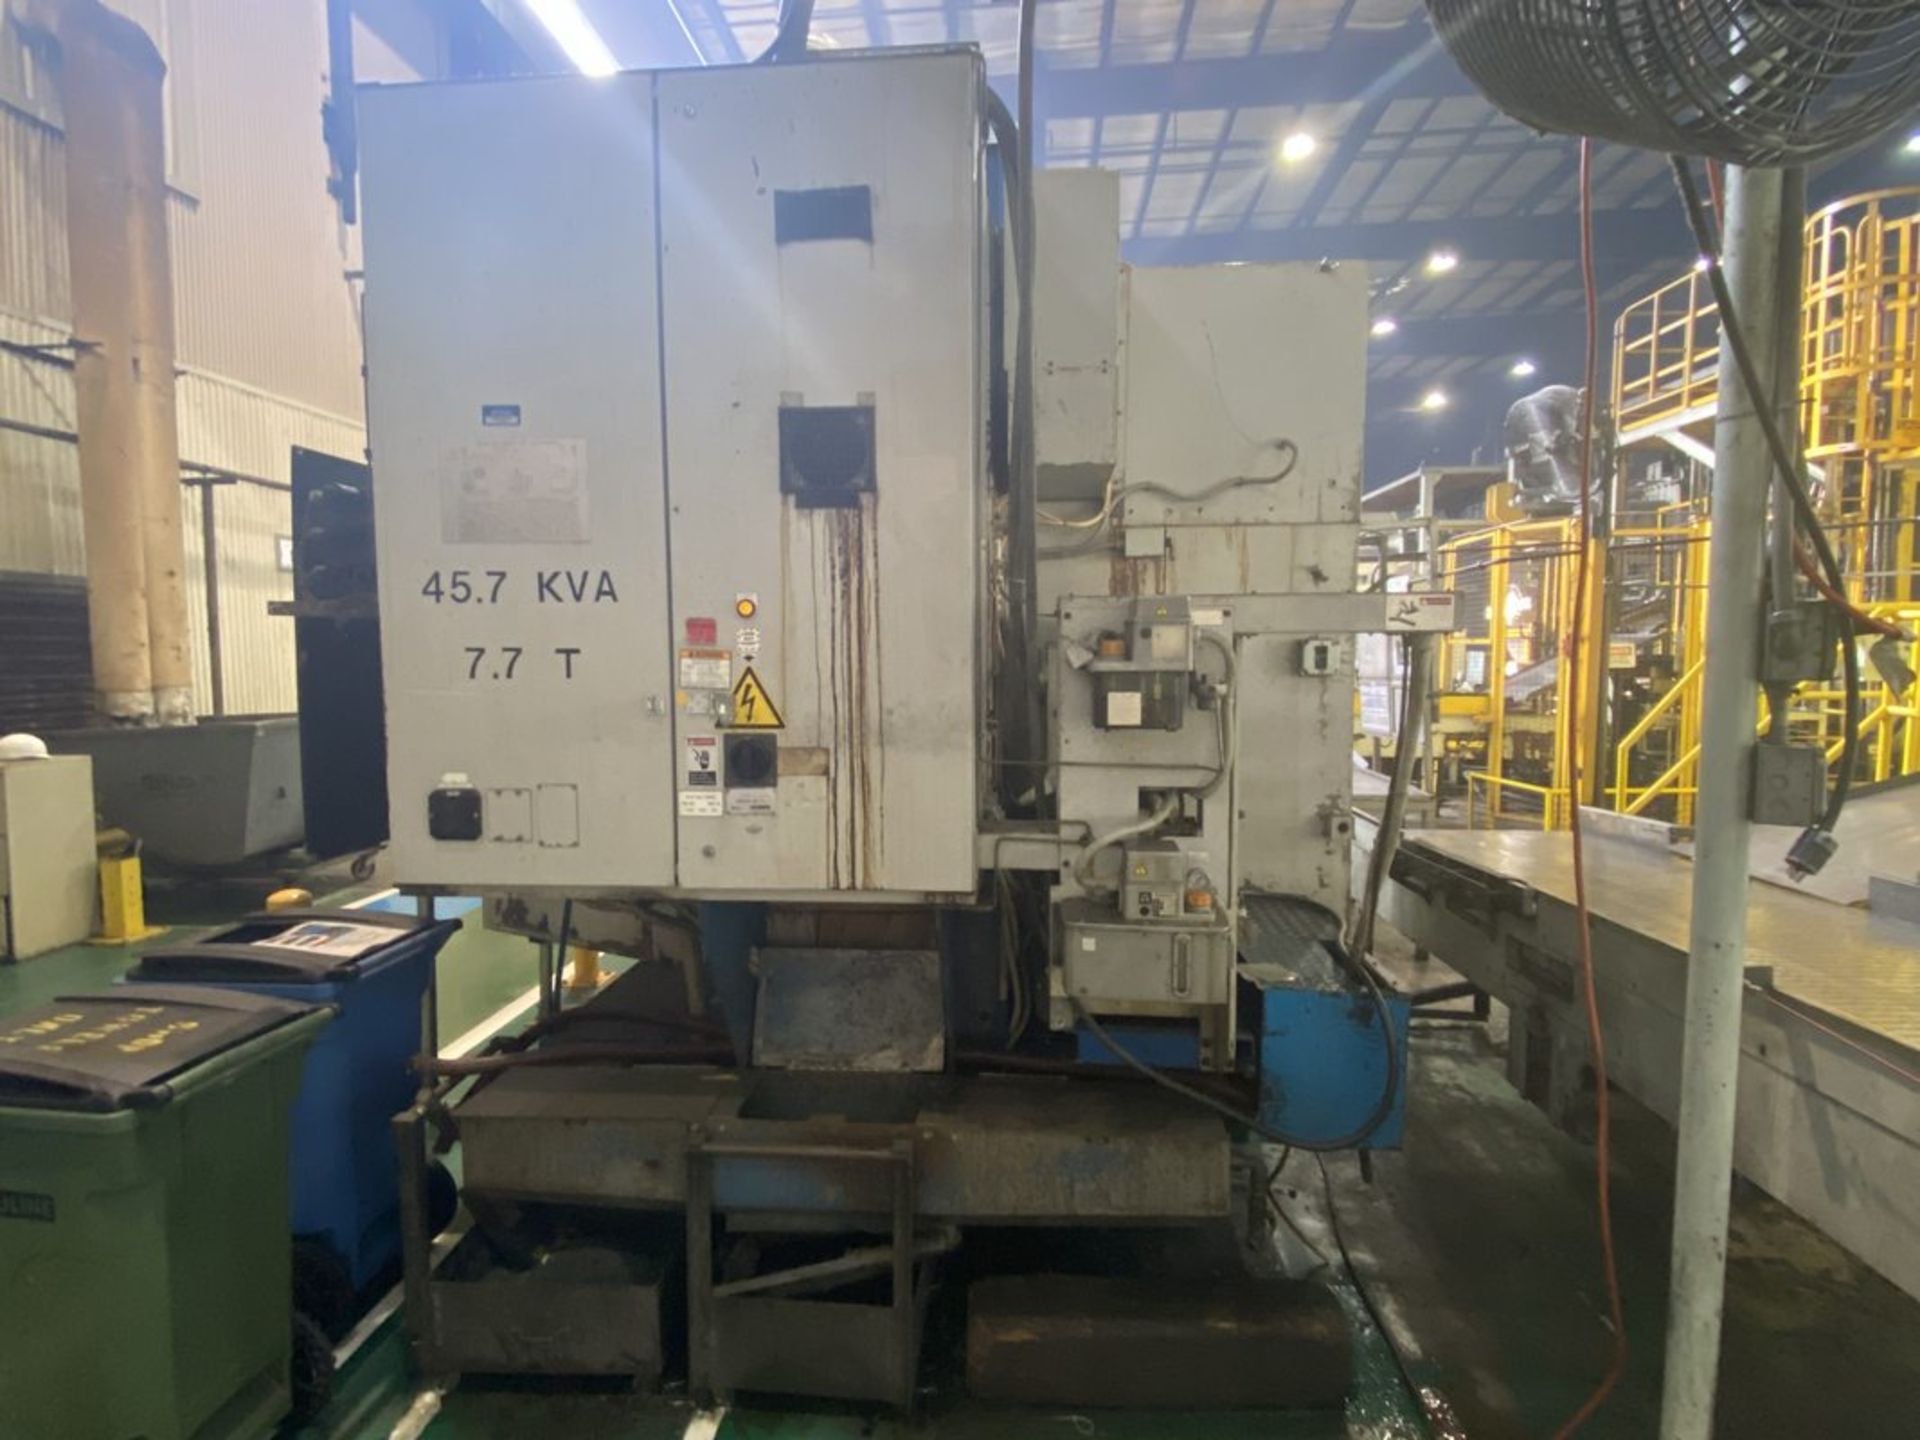 Enshu EV530 CNC Vertical Machining Center - Image 4 of 13